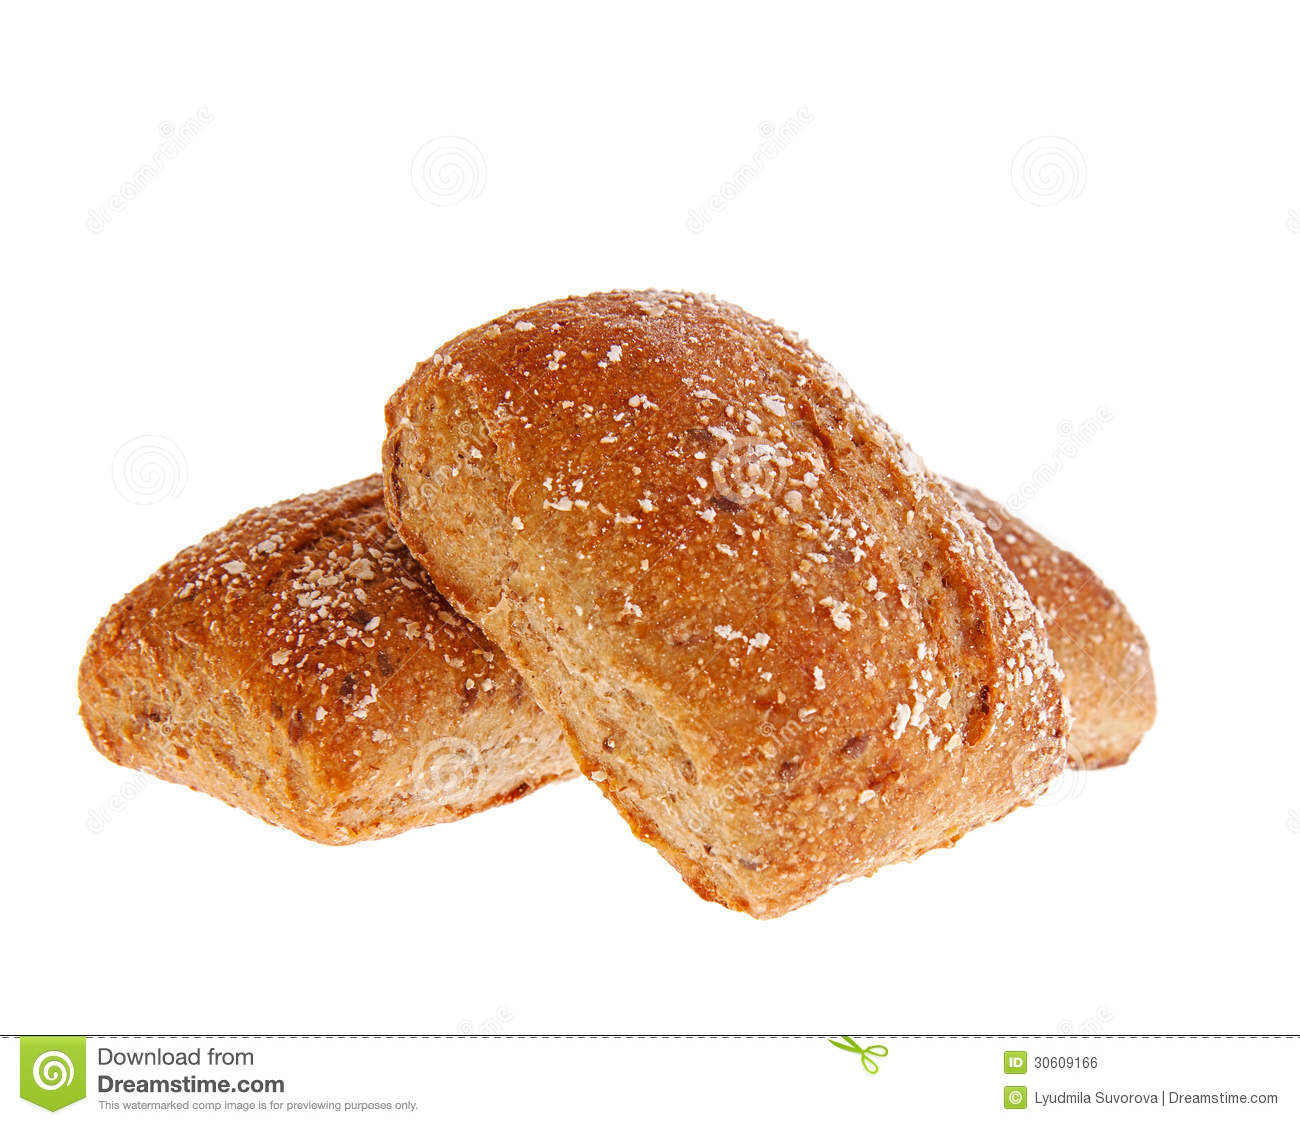 Artisan Bread Royalty Free Stock Image   Image  30609166